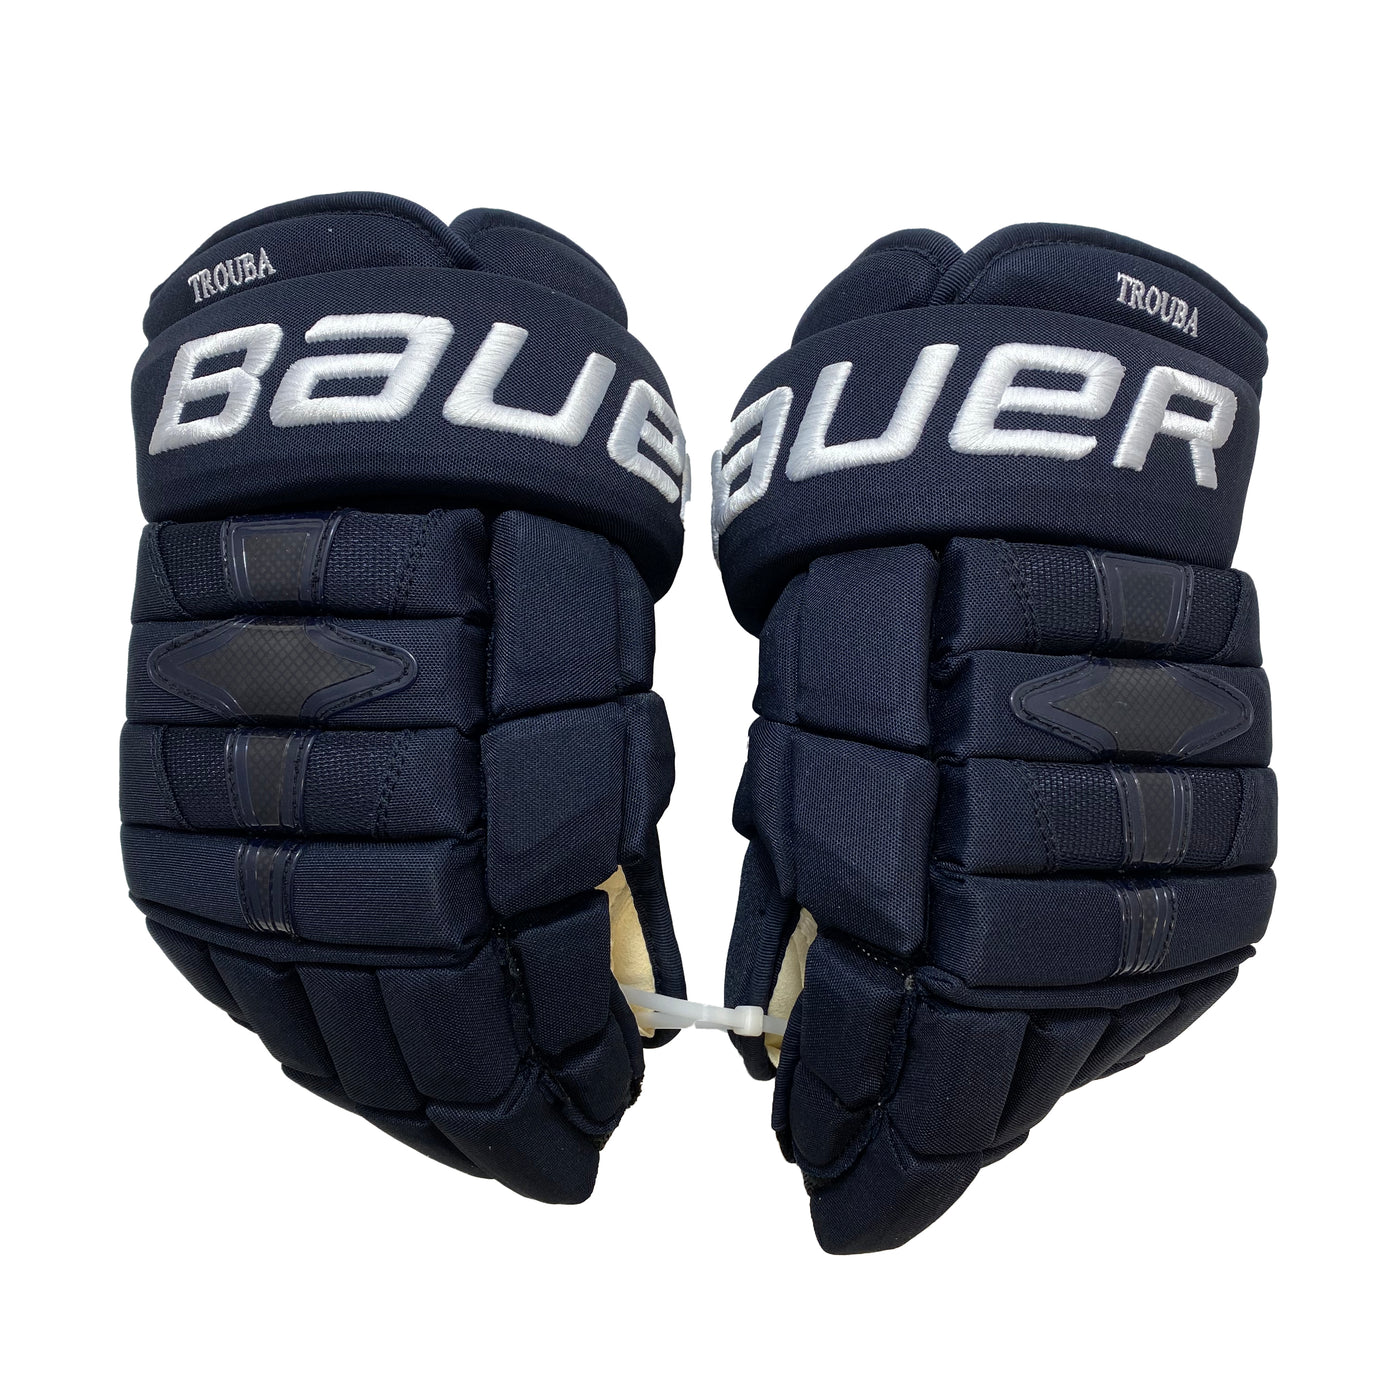 Bauer Nexus 1N - Winnipeg Jets - Pro Stock Hockey Gloves - Jacob Trouba